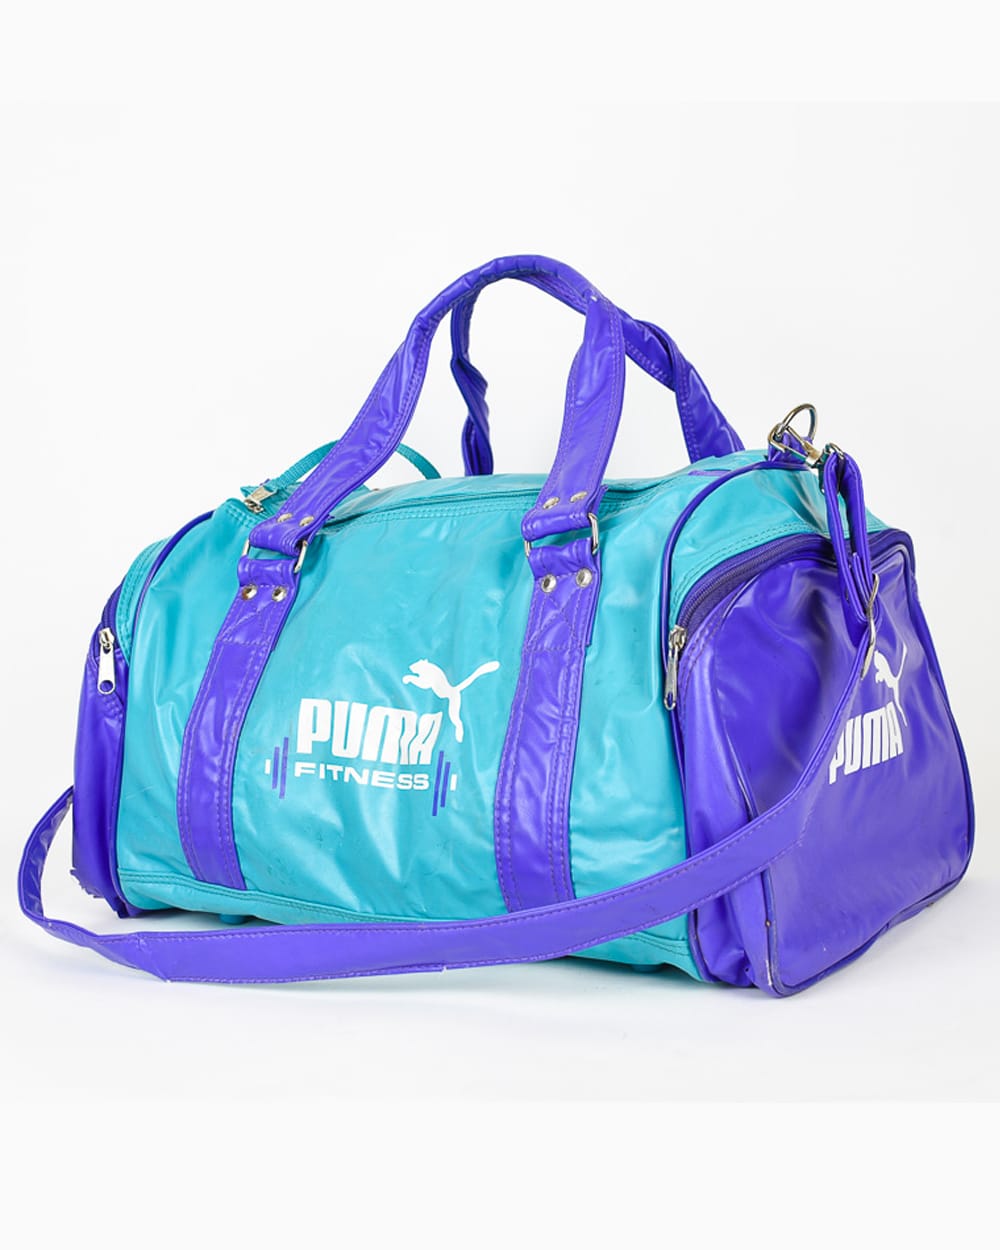  Puma Fitness Duffle Bag